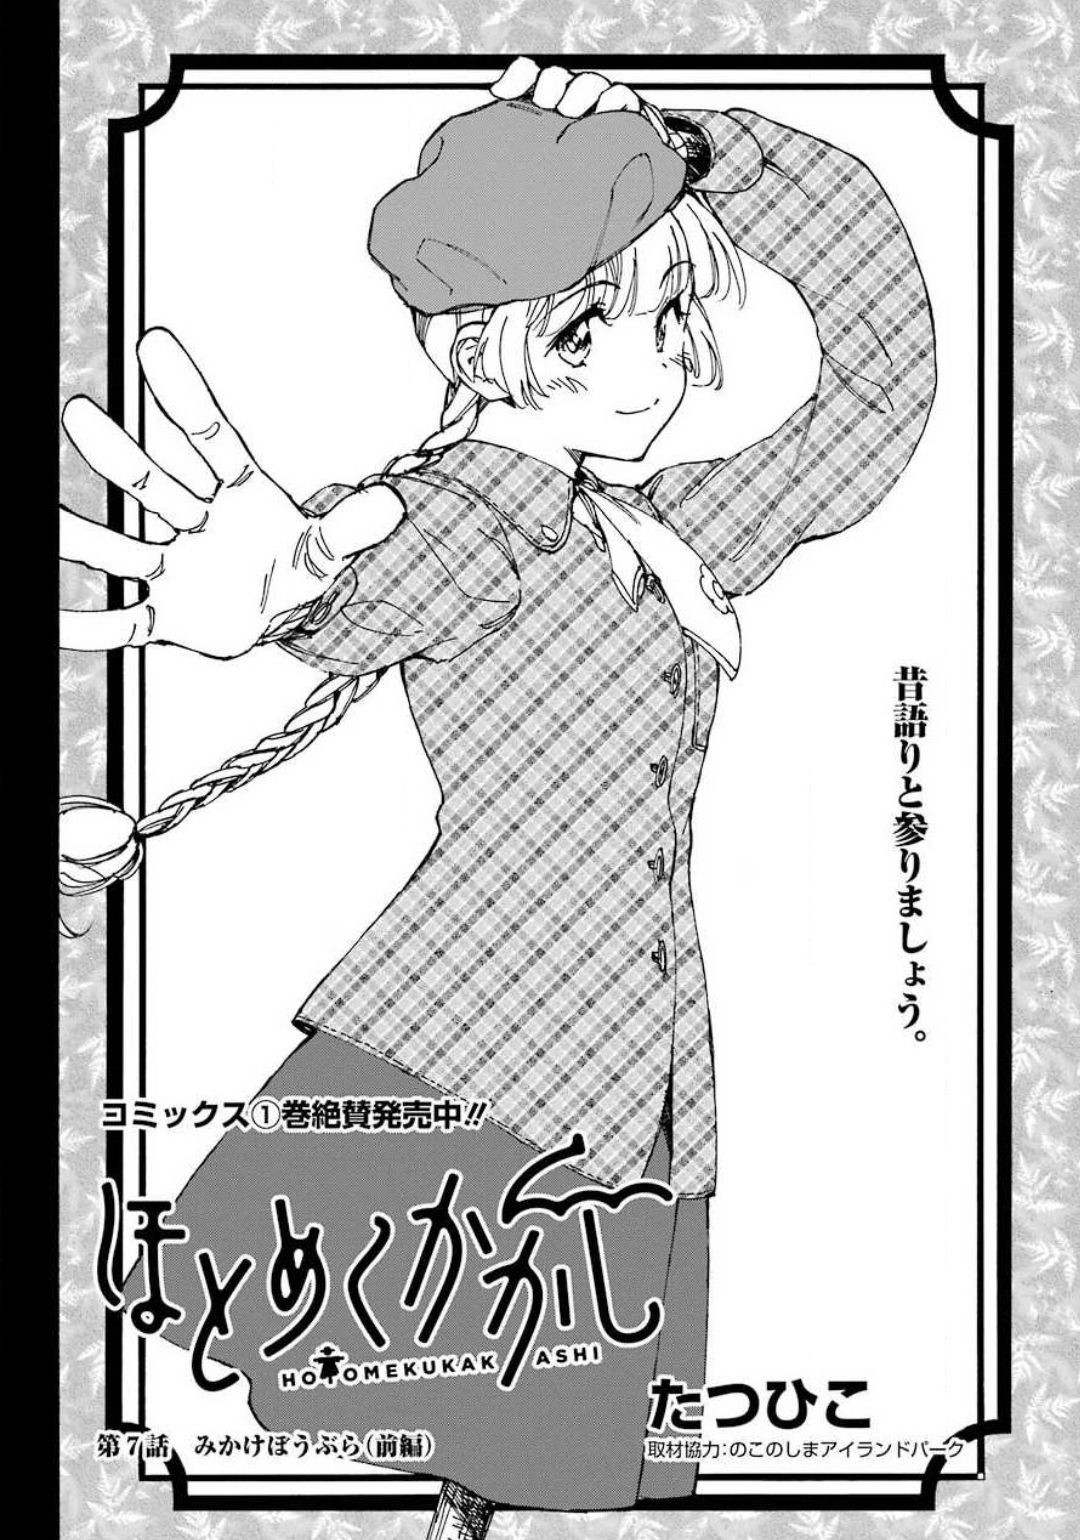 Hotomeku-kakashi - Chapter 07-1 - Page 2